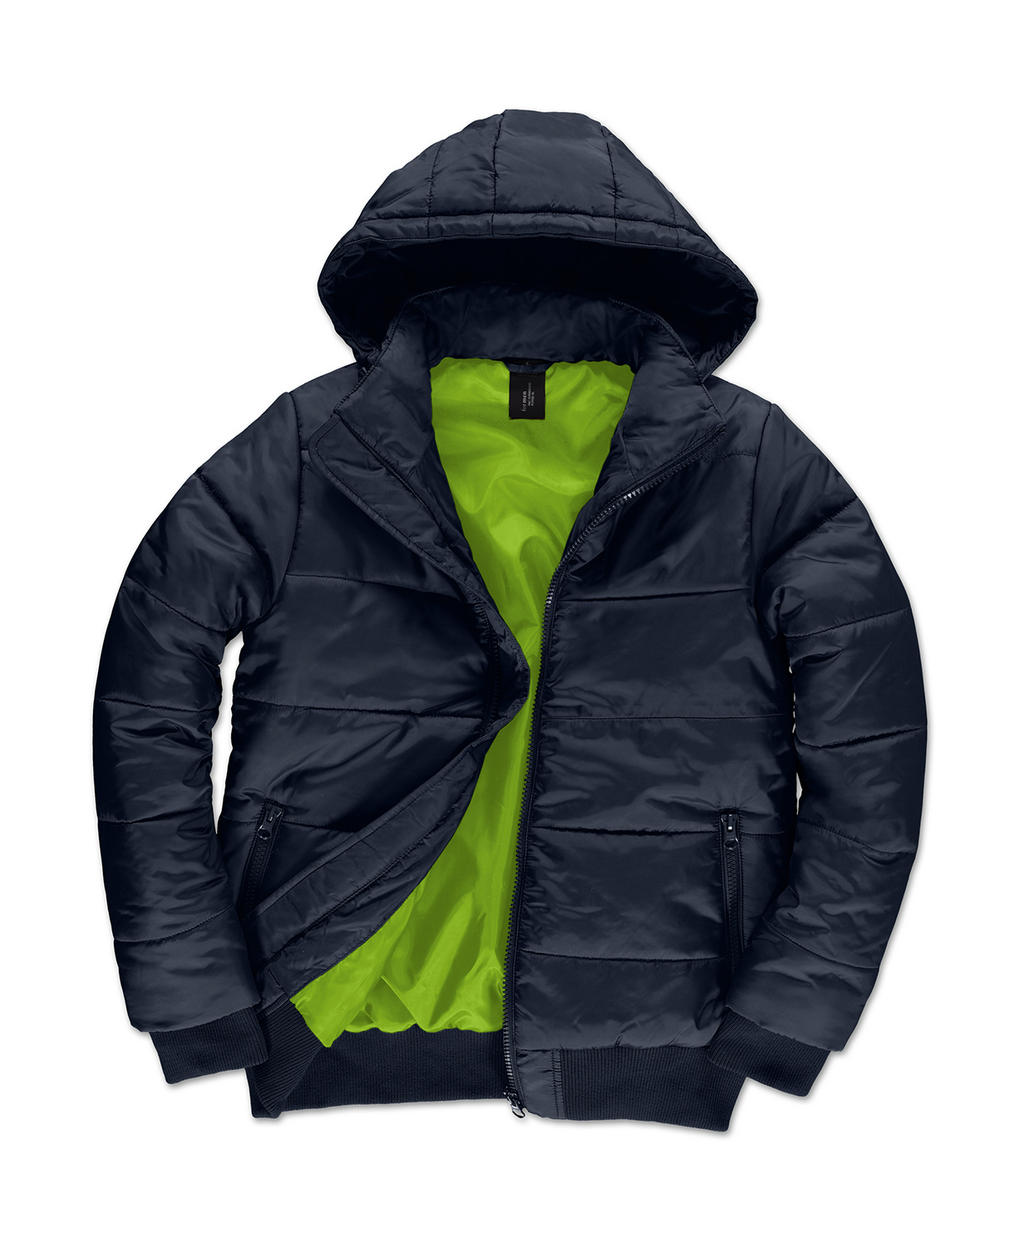  Superhood/men Jacket in Farbe Navy/Neon Green